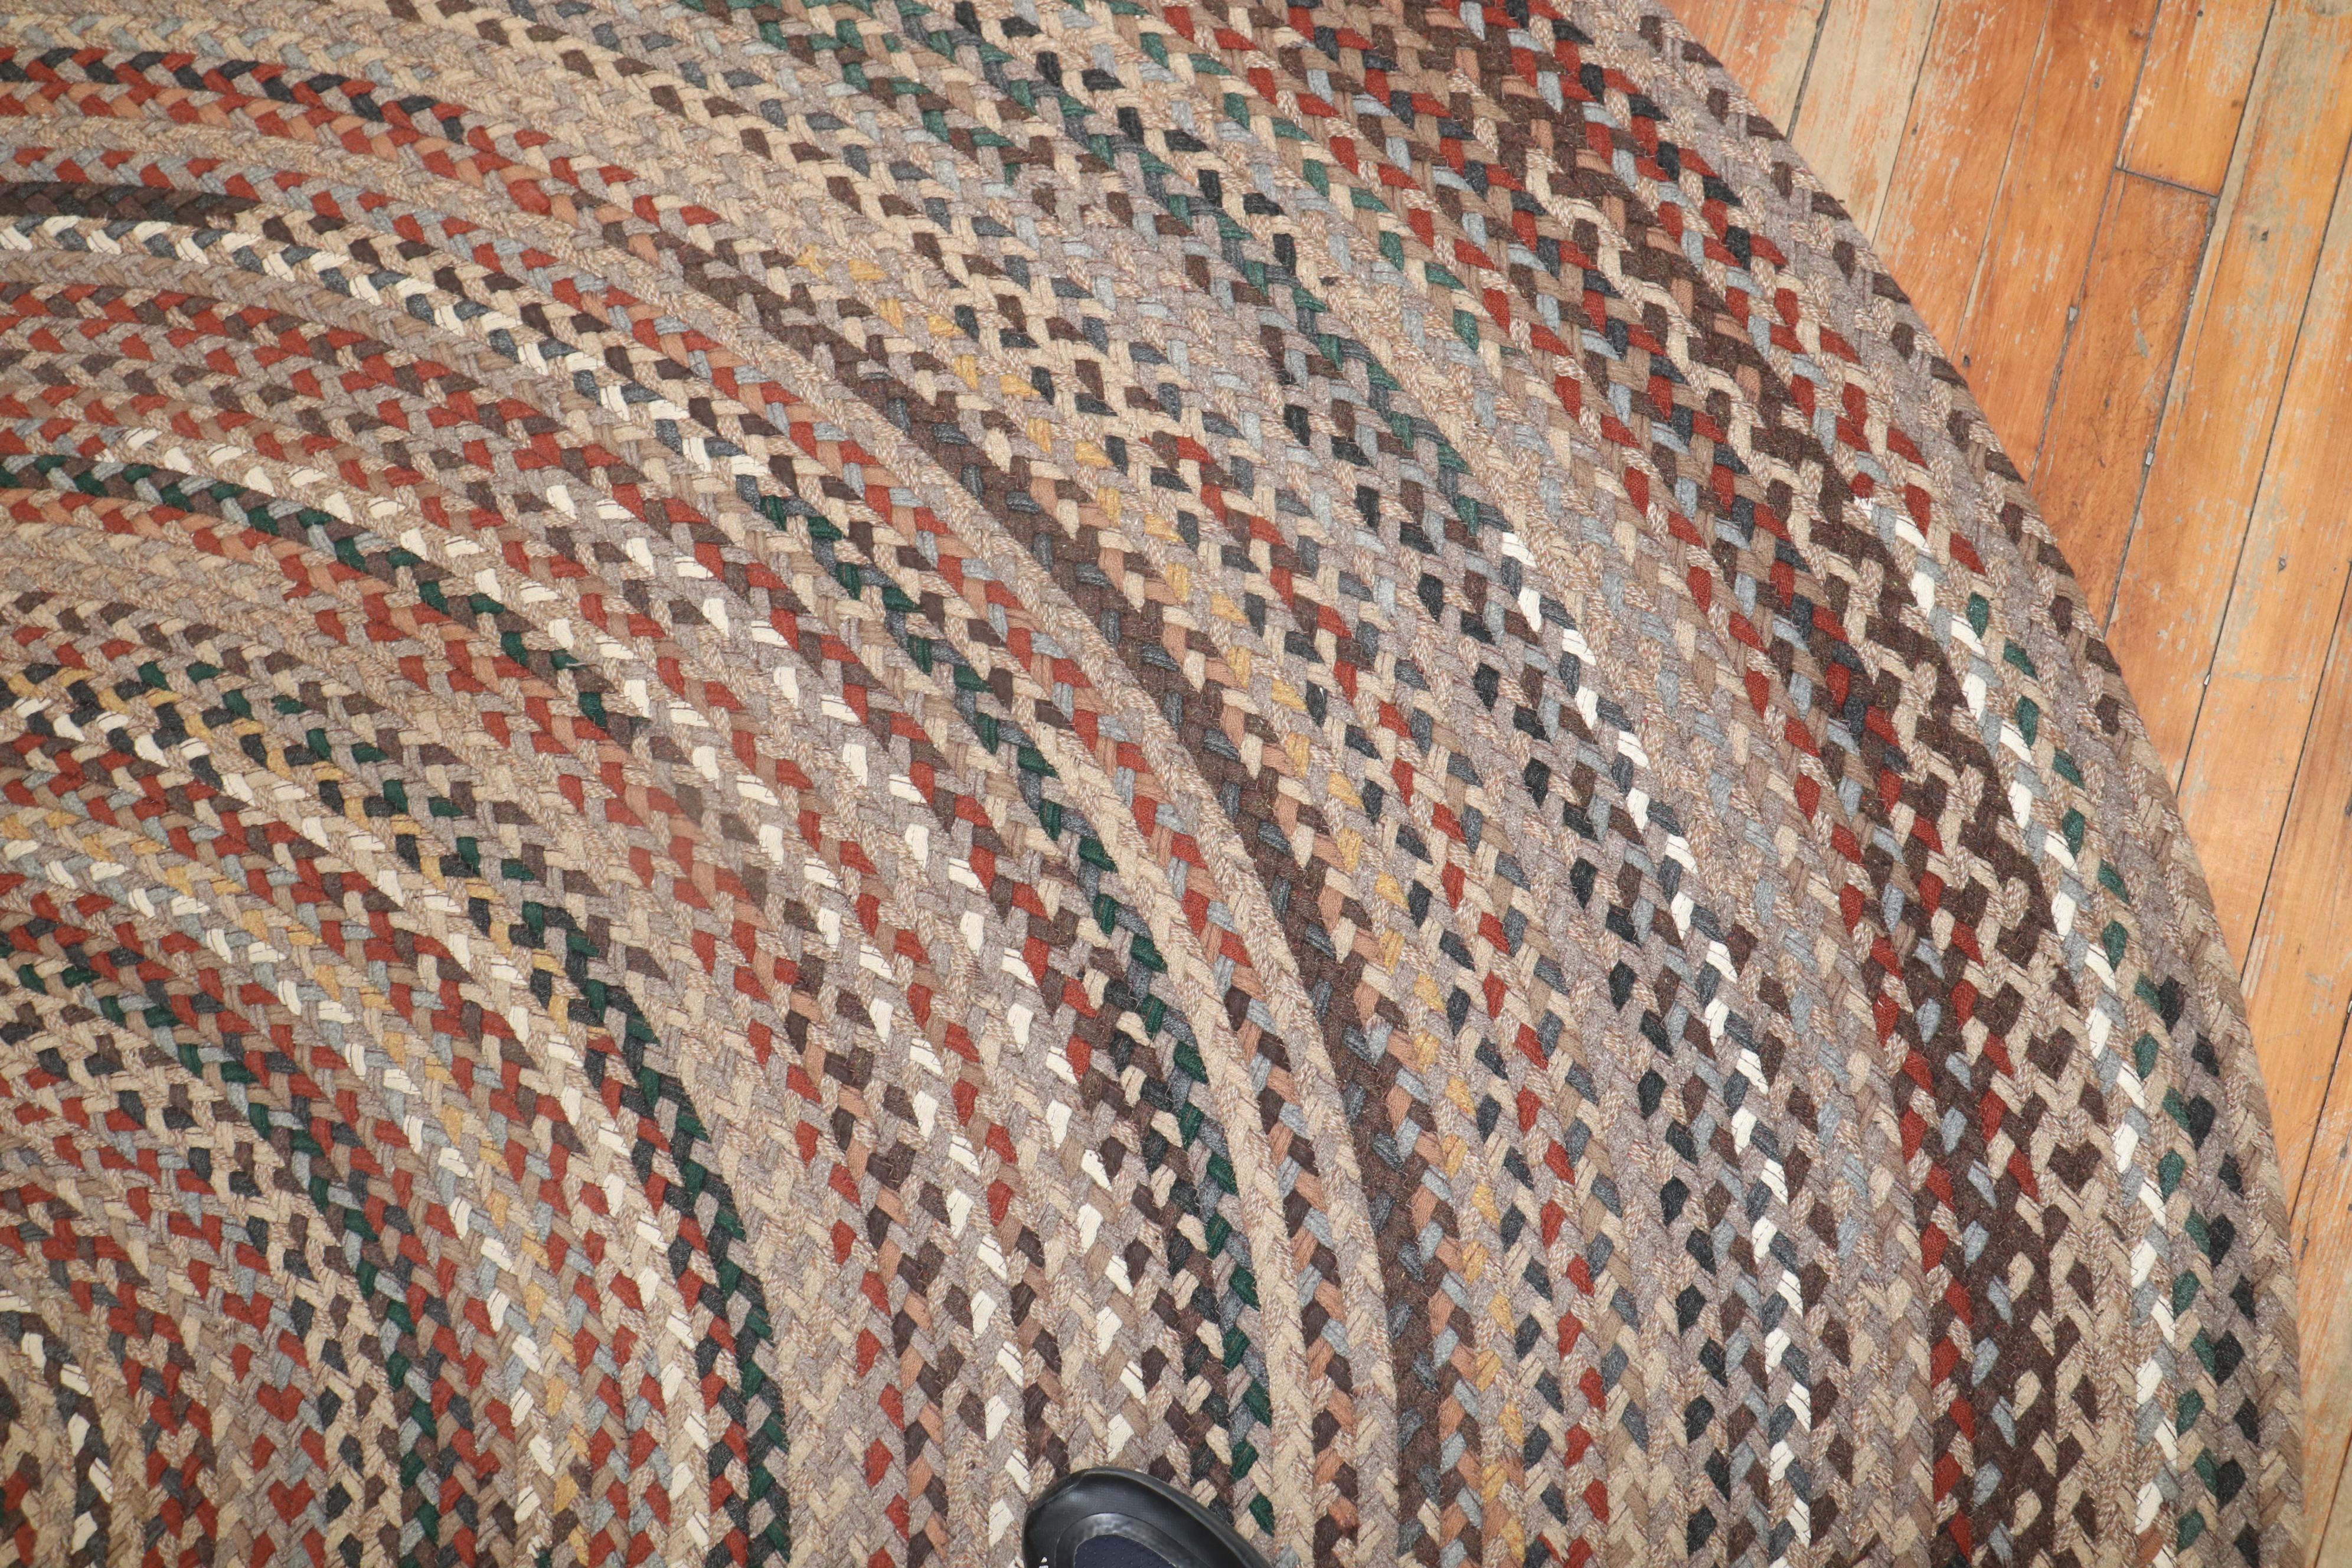 Folk Art Vintage American Braid Carpet For Sale